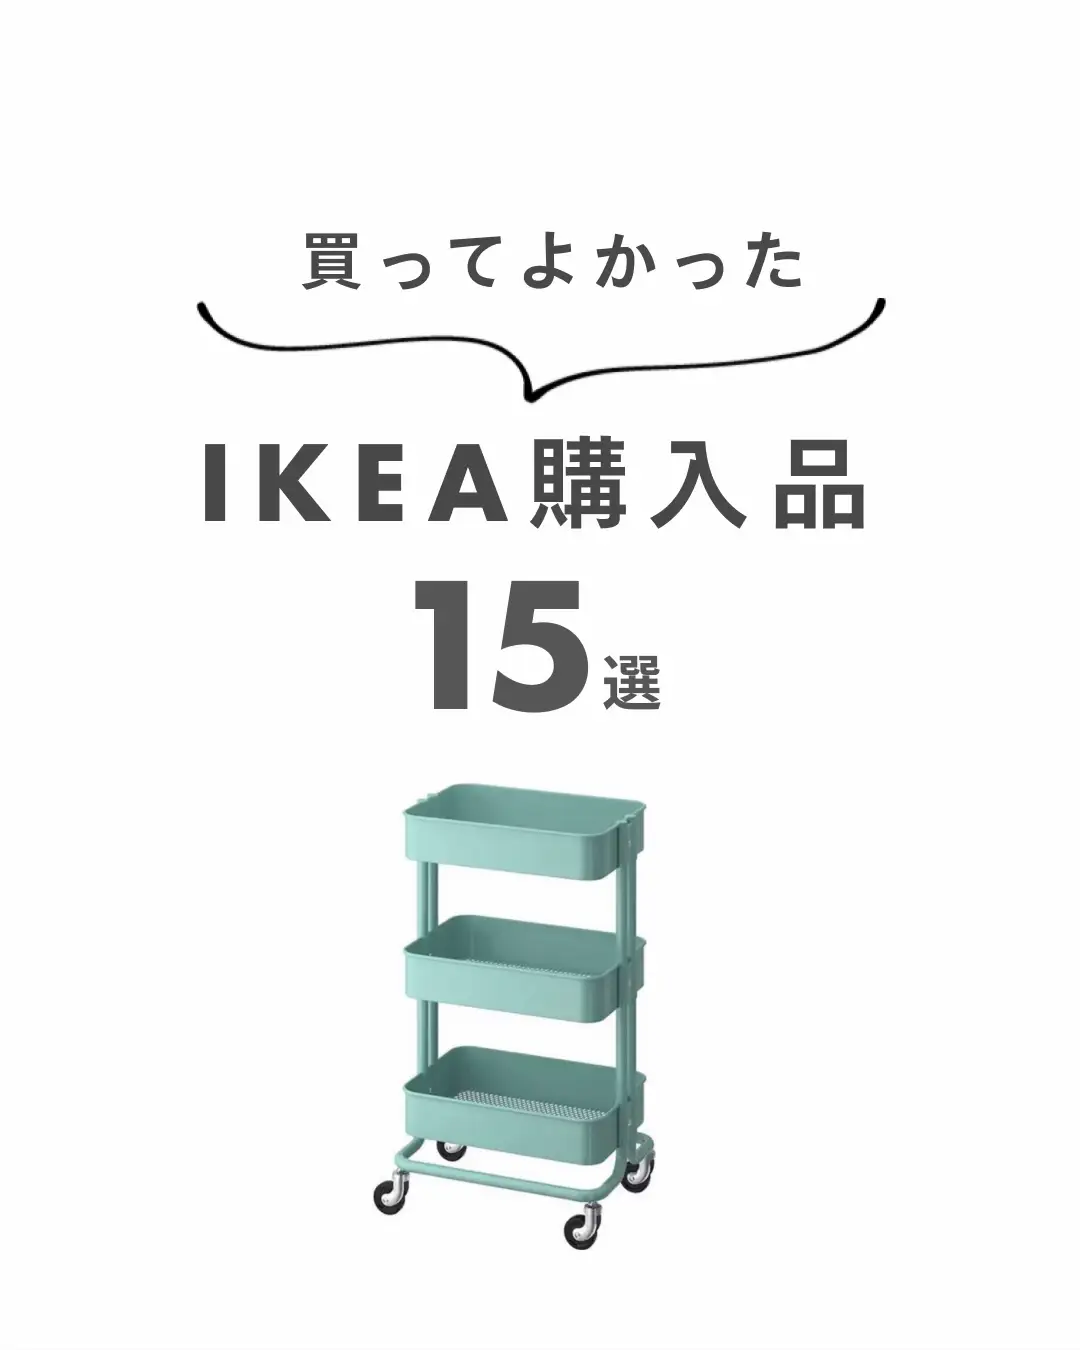 【IKEA神アイテム】買ってよかった商品のご紹介の画像 (0枚目)